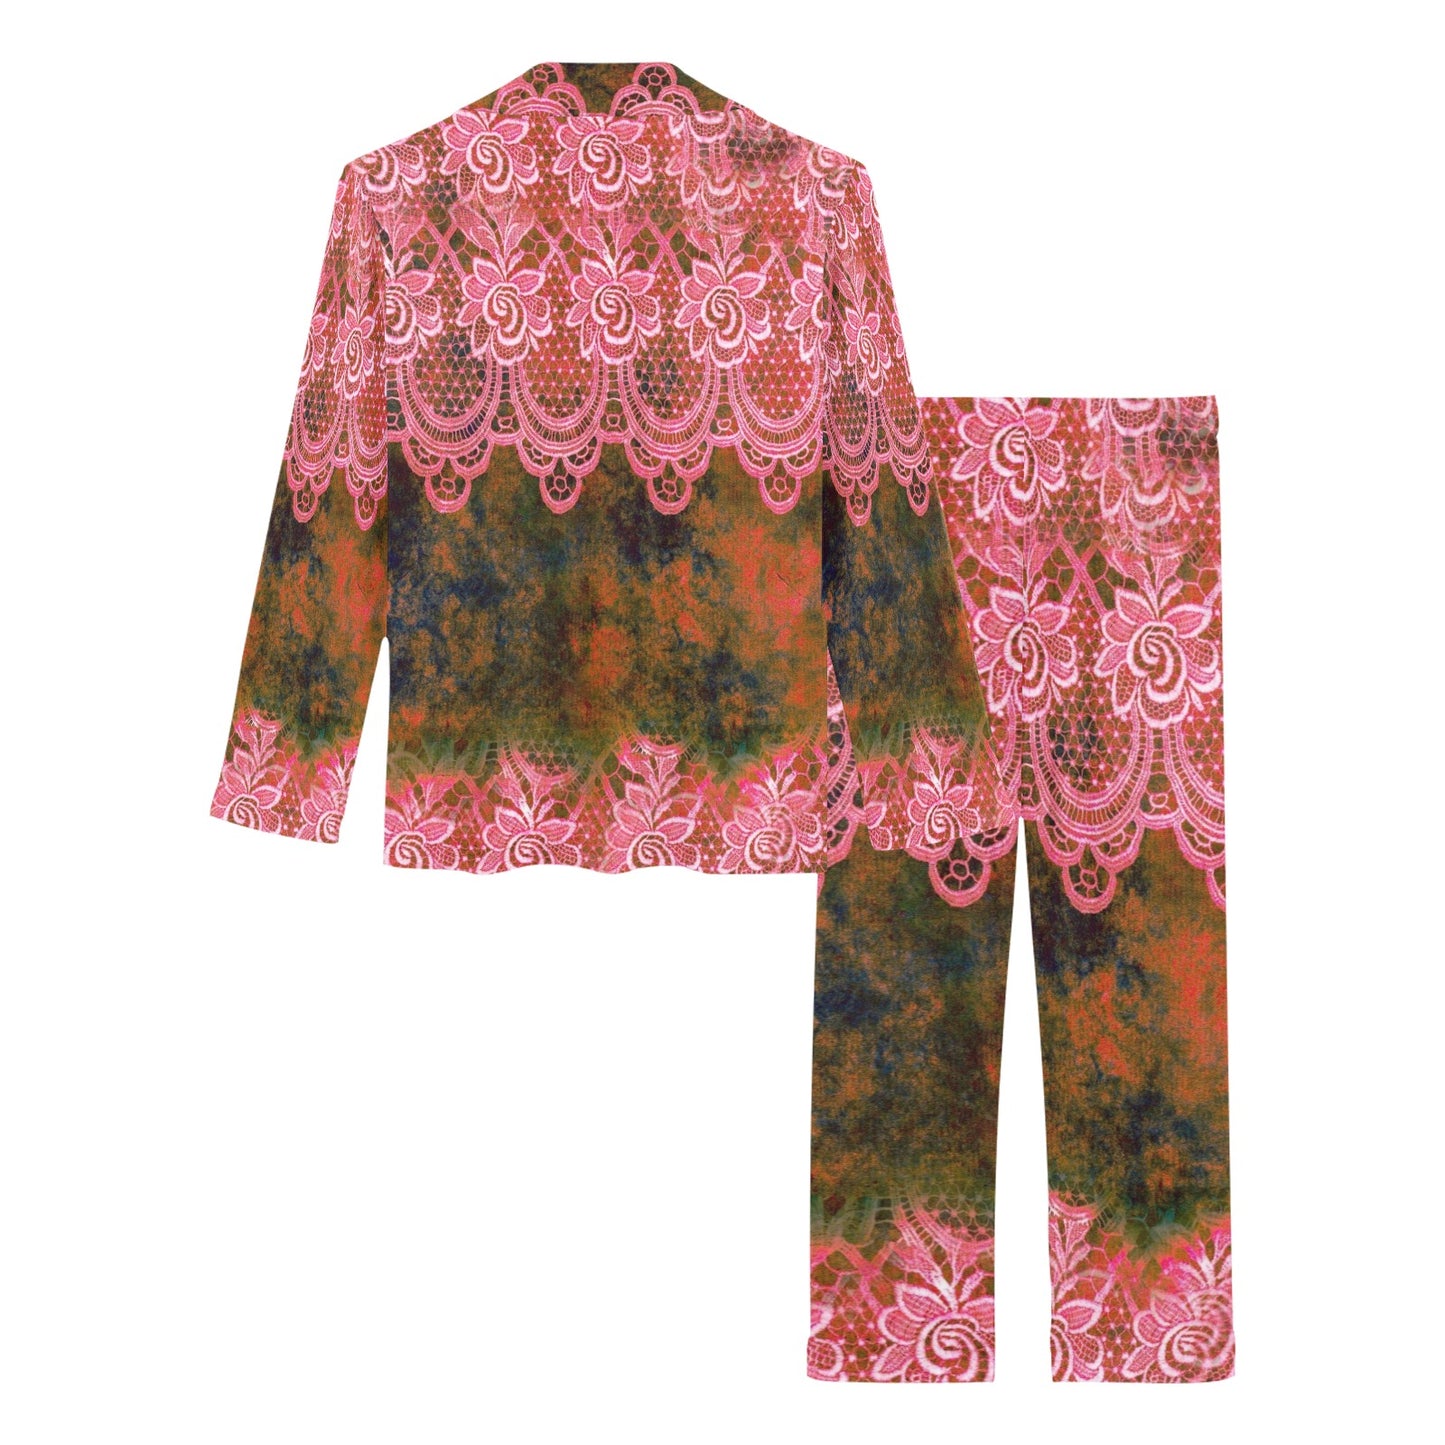 Victorian printed lace pajama set, design 32 Women's Long Pajama Set (Sets 02)